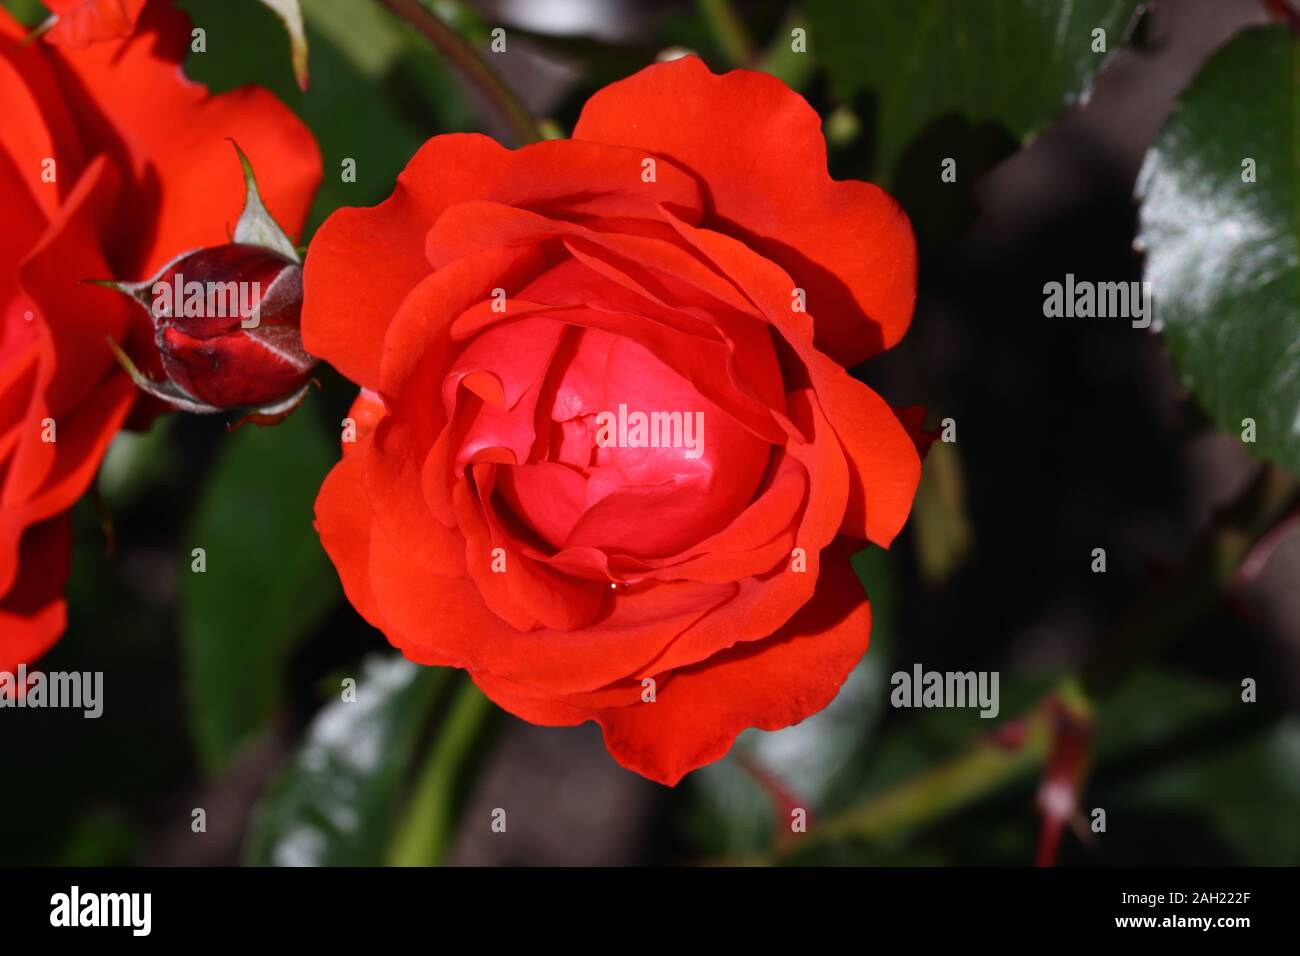 Trumepeter: Orange - scarlet.  Mild fragrance.  35 to 45 petals.  Average diameter 2.75'.  Medium, full (26-40 petals), cluster-flowered rose. Stock Photo